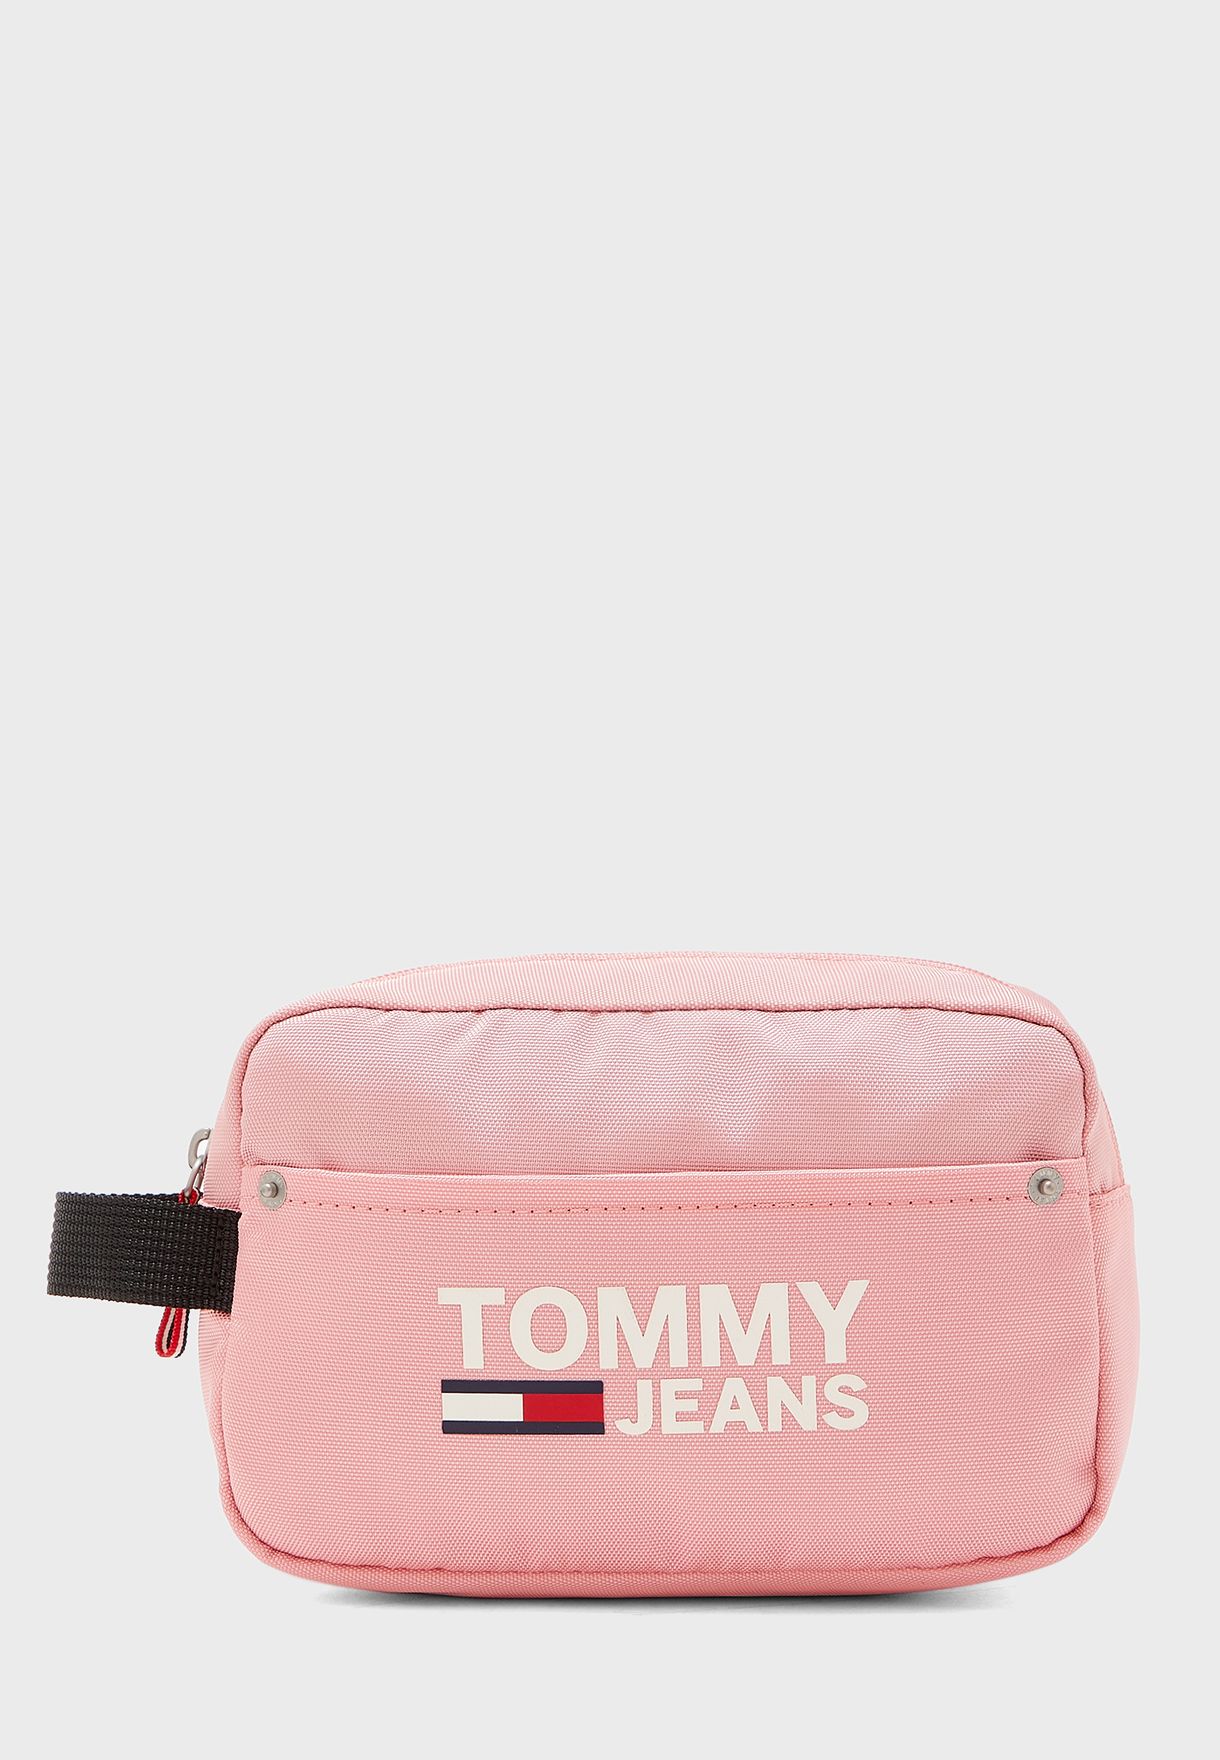 tommy hilfiger pink suitcase